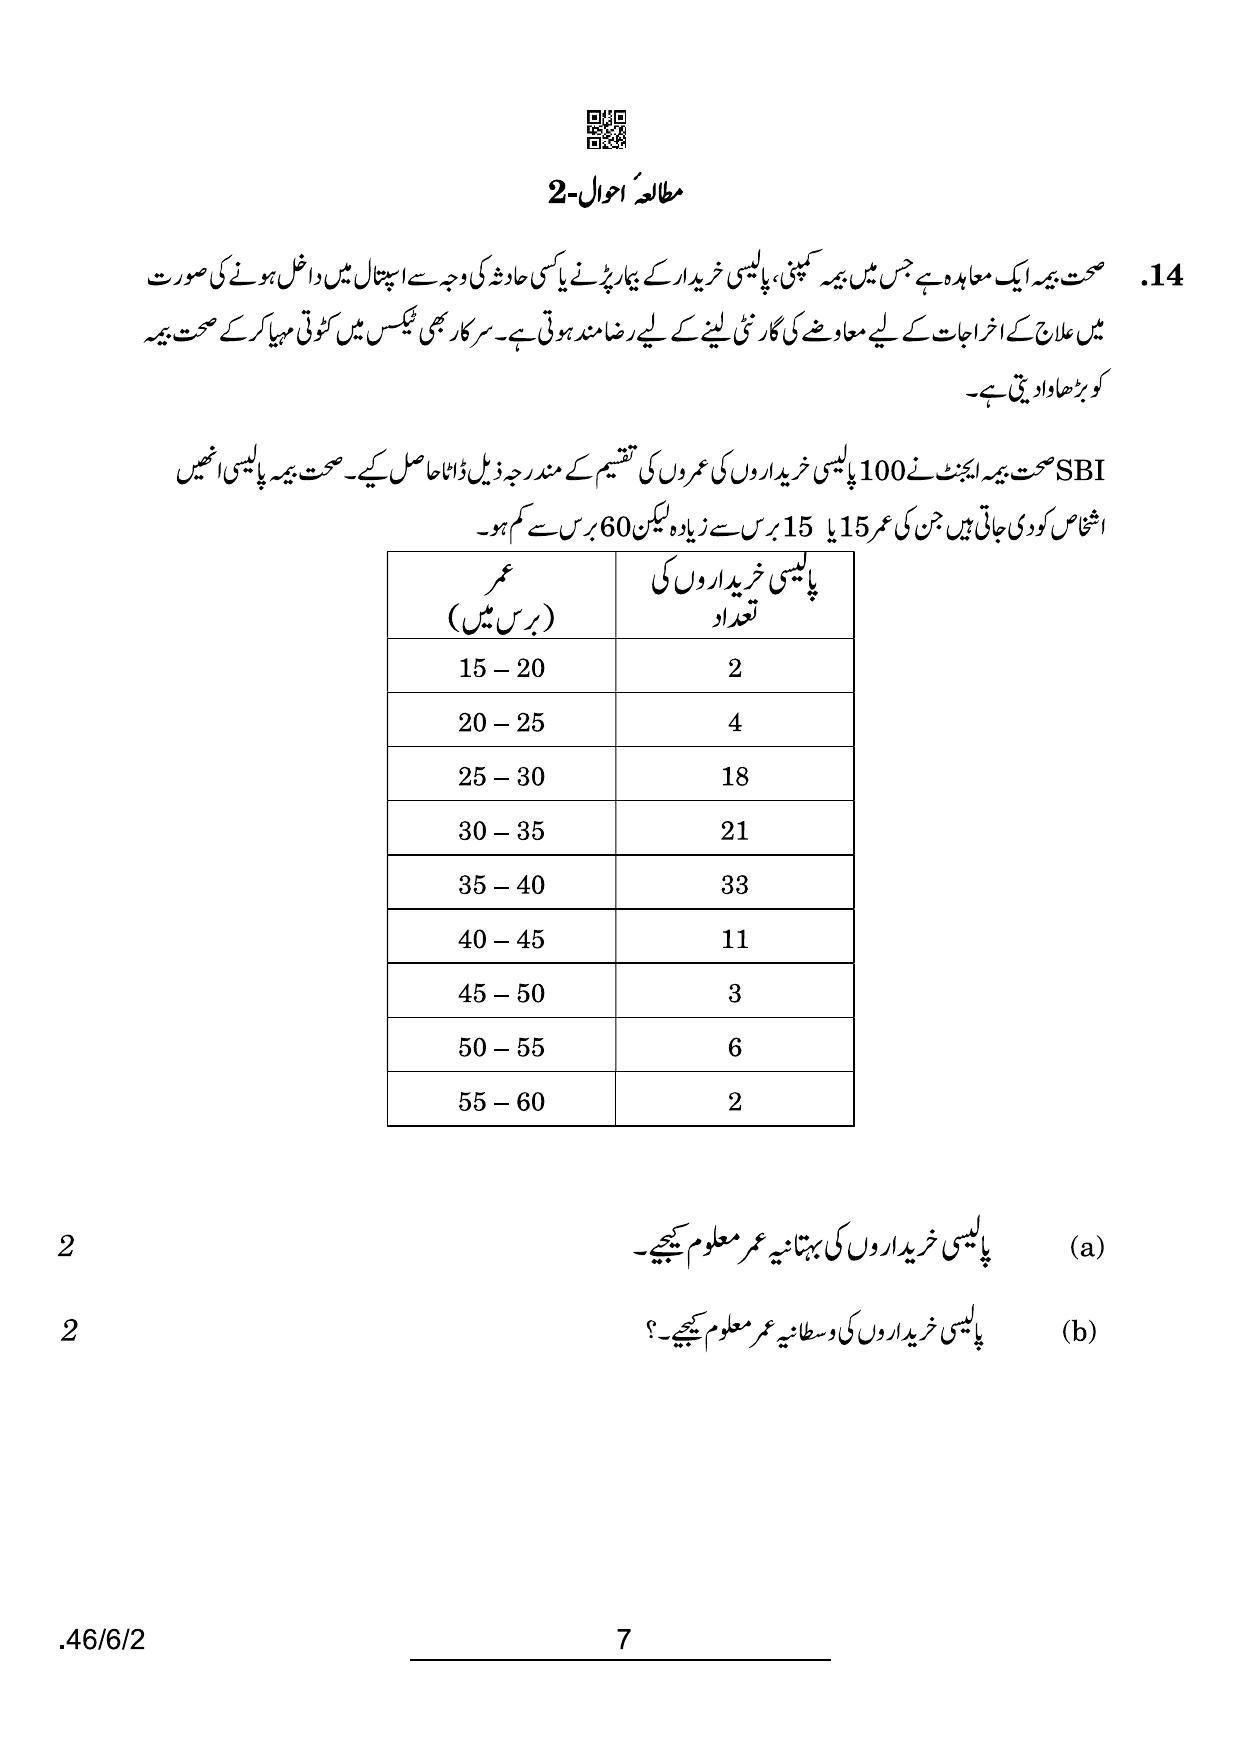 CBSE Class 10 46-6-2 Maths Standard Urdu 2022 Compartment Question Paper - Page 7